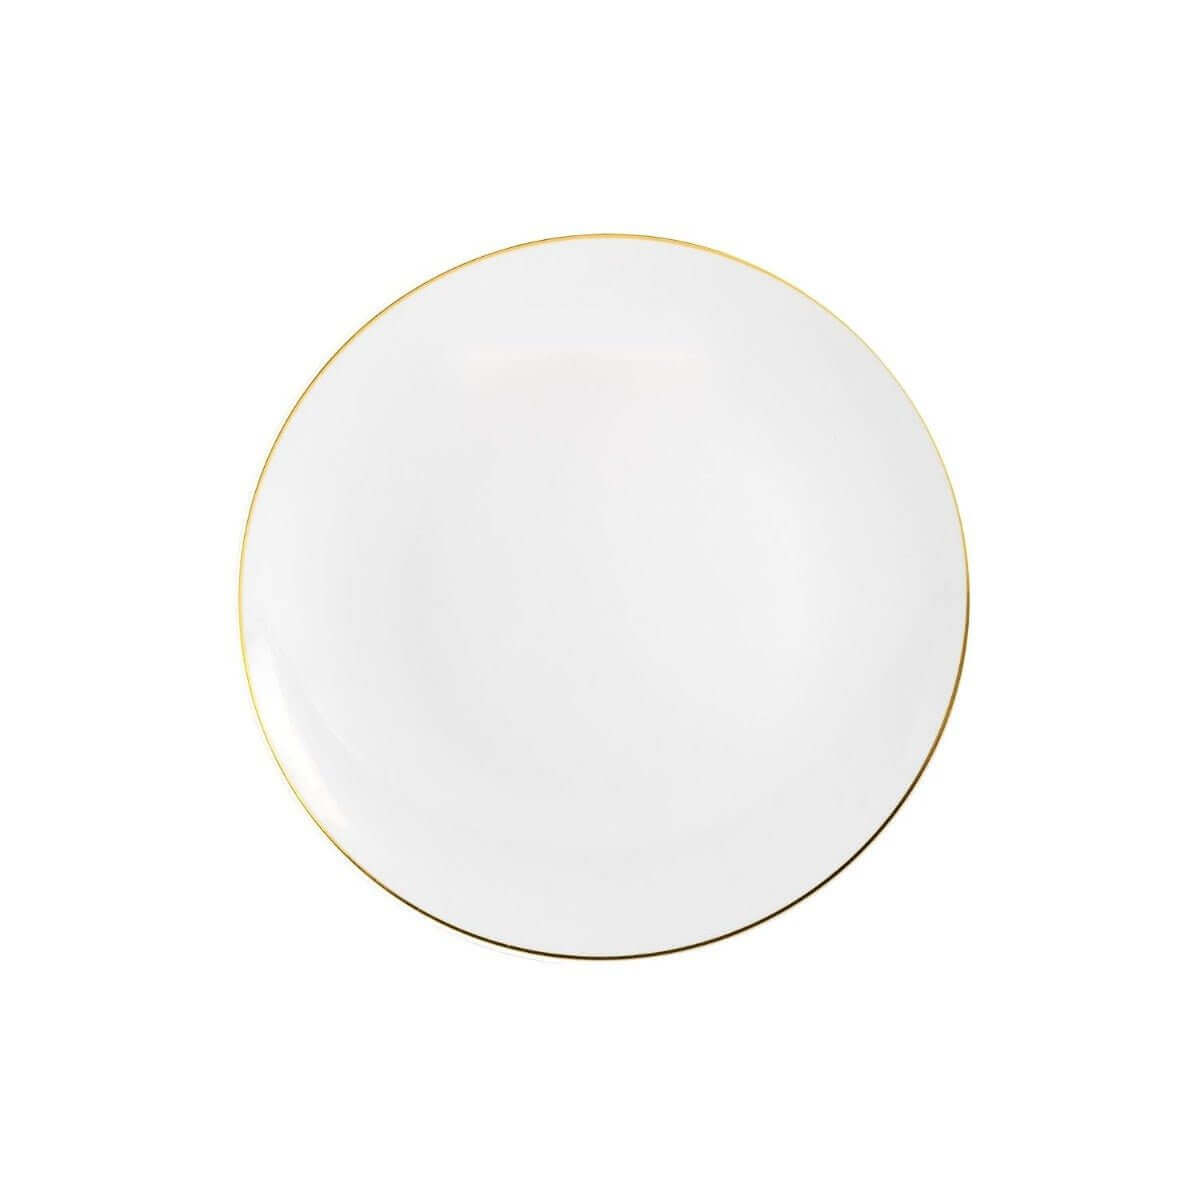 8" Classic Gold Design Plastic Plates (120 Count) - Yom Tov Settings